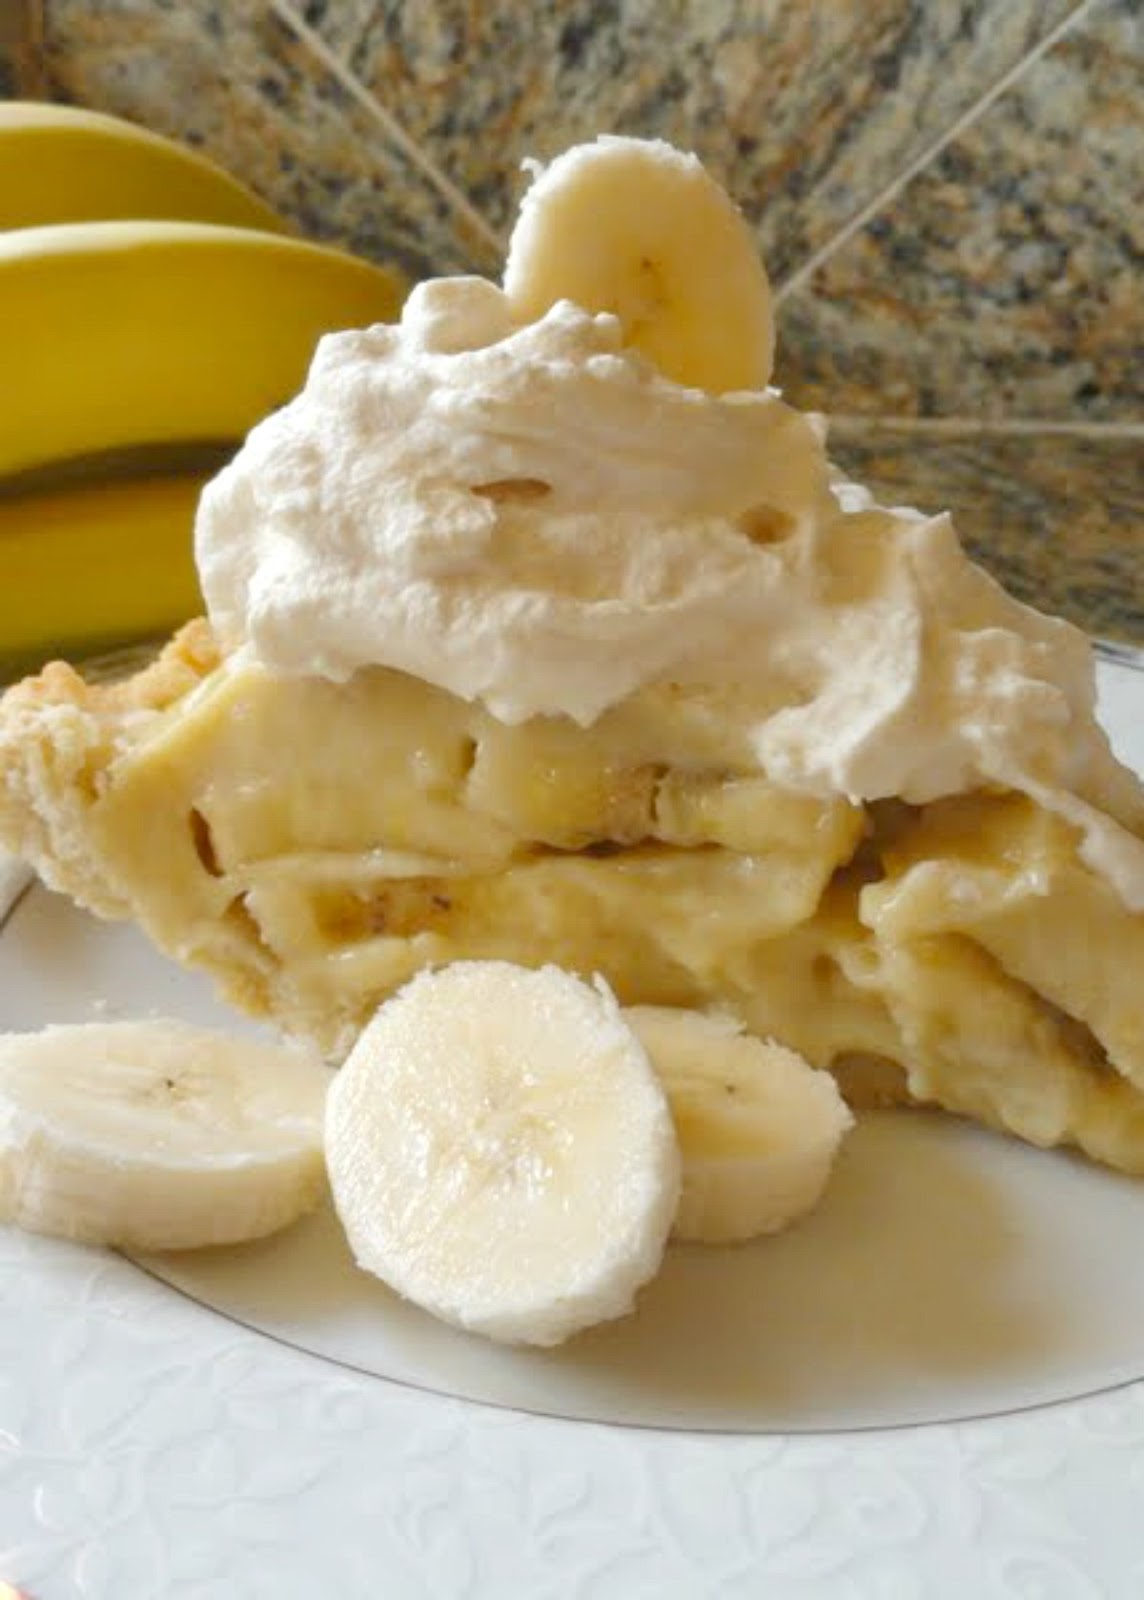 Banana Cream Pie slice with whipped cream and a sliced banana.